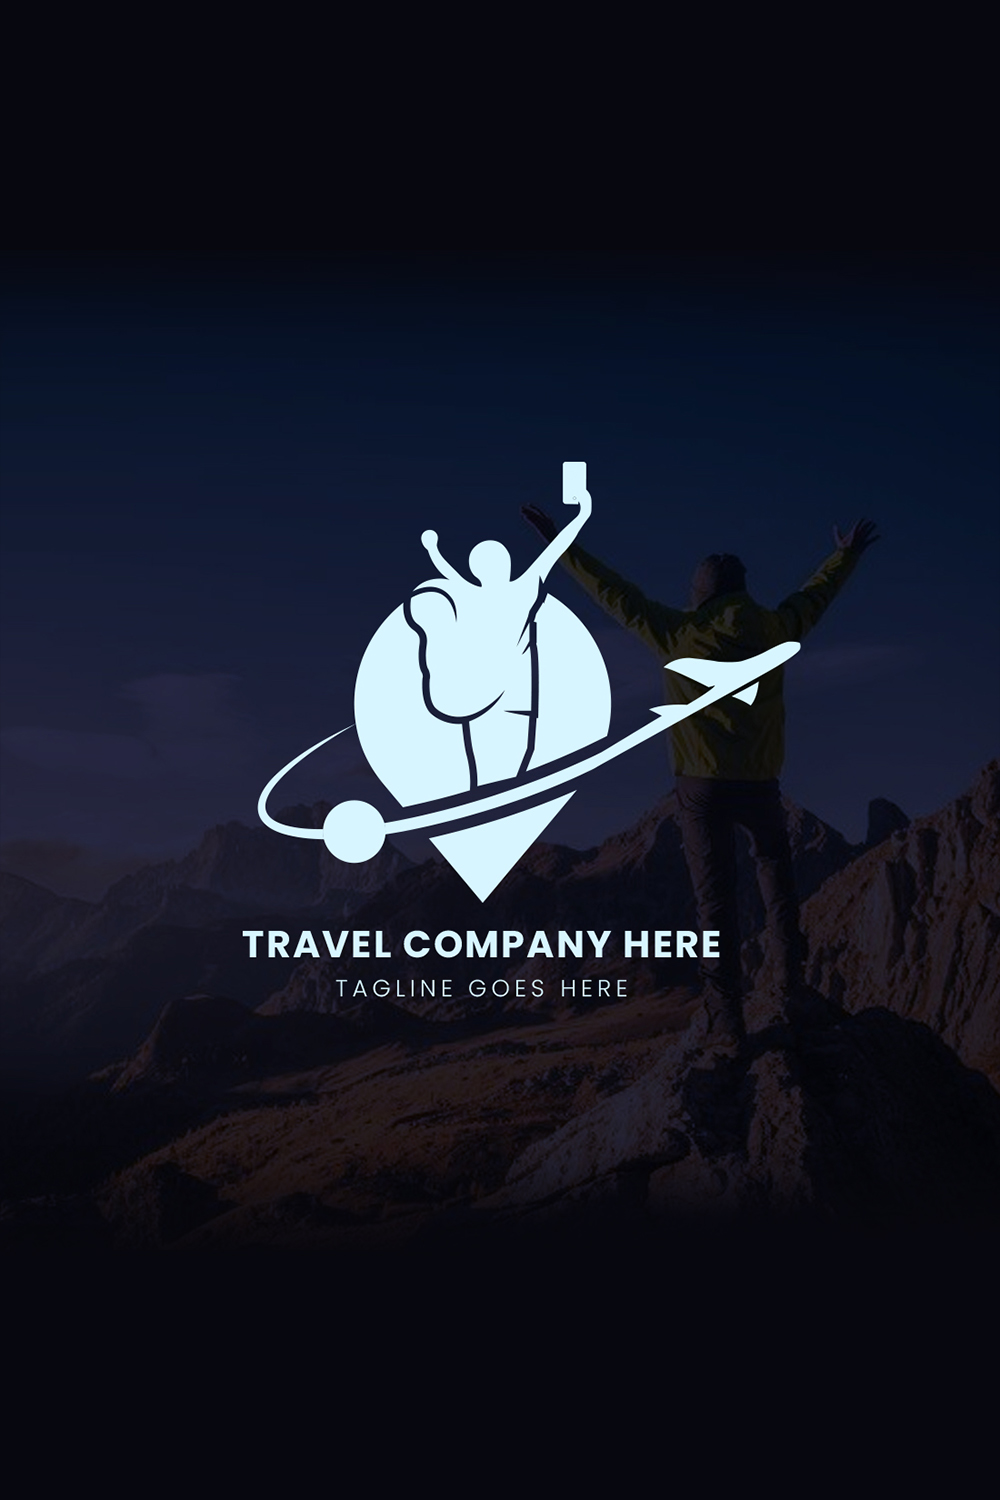 Global travel logo pinterest preview image.